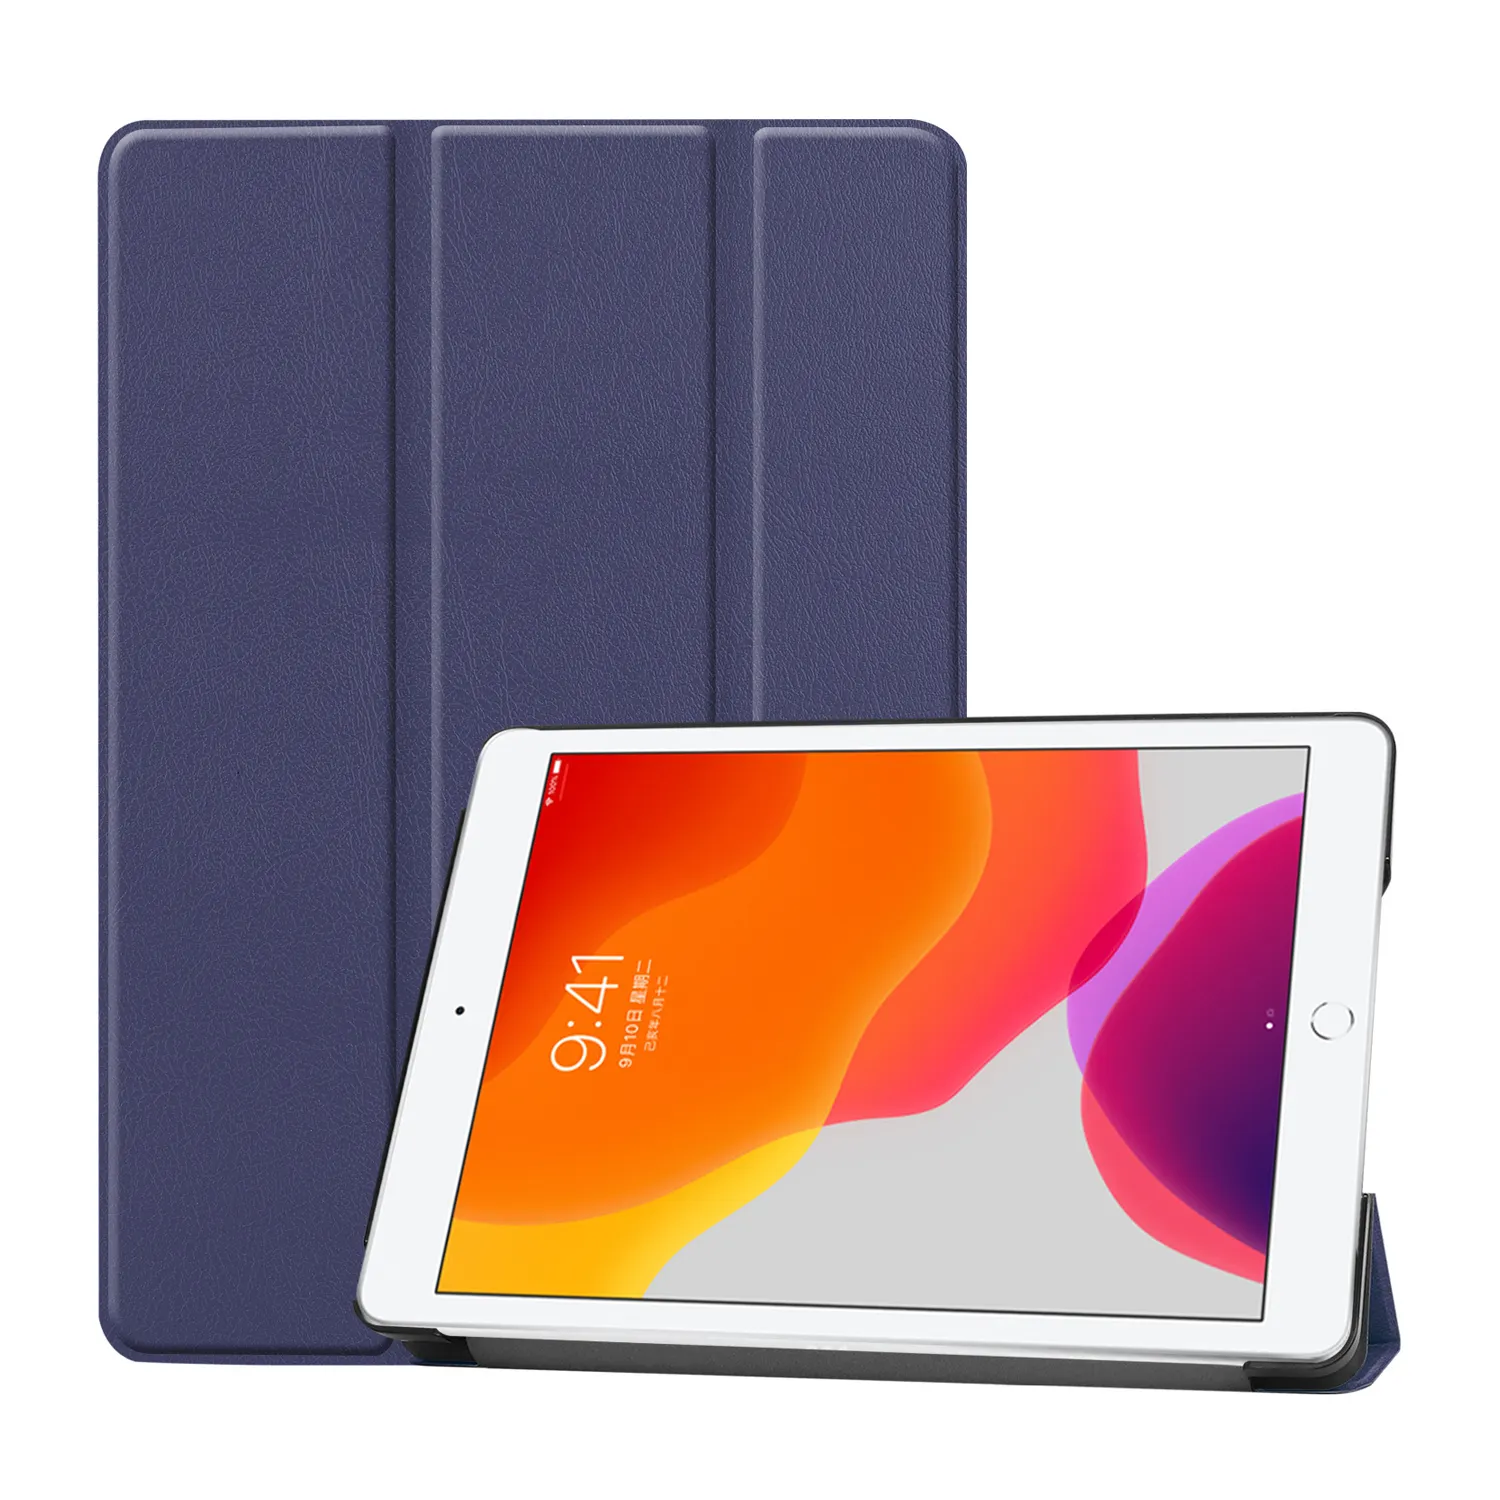 Smart Folio Auto Wake Sleep Stand Cover Slim Flip Cover Case For Apple iPad 10.2 2019